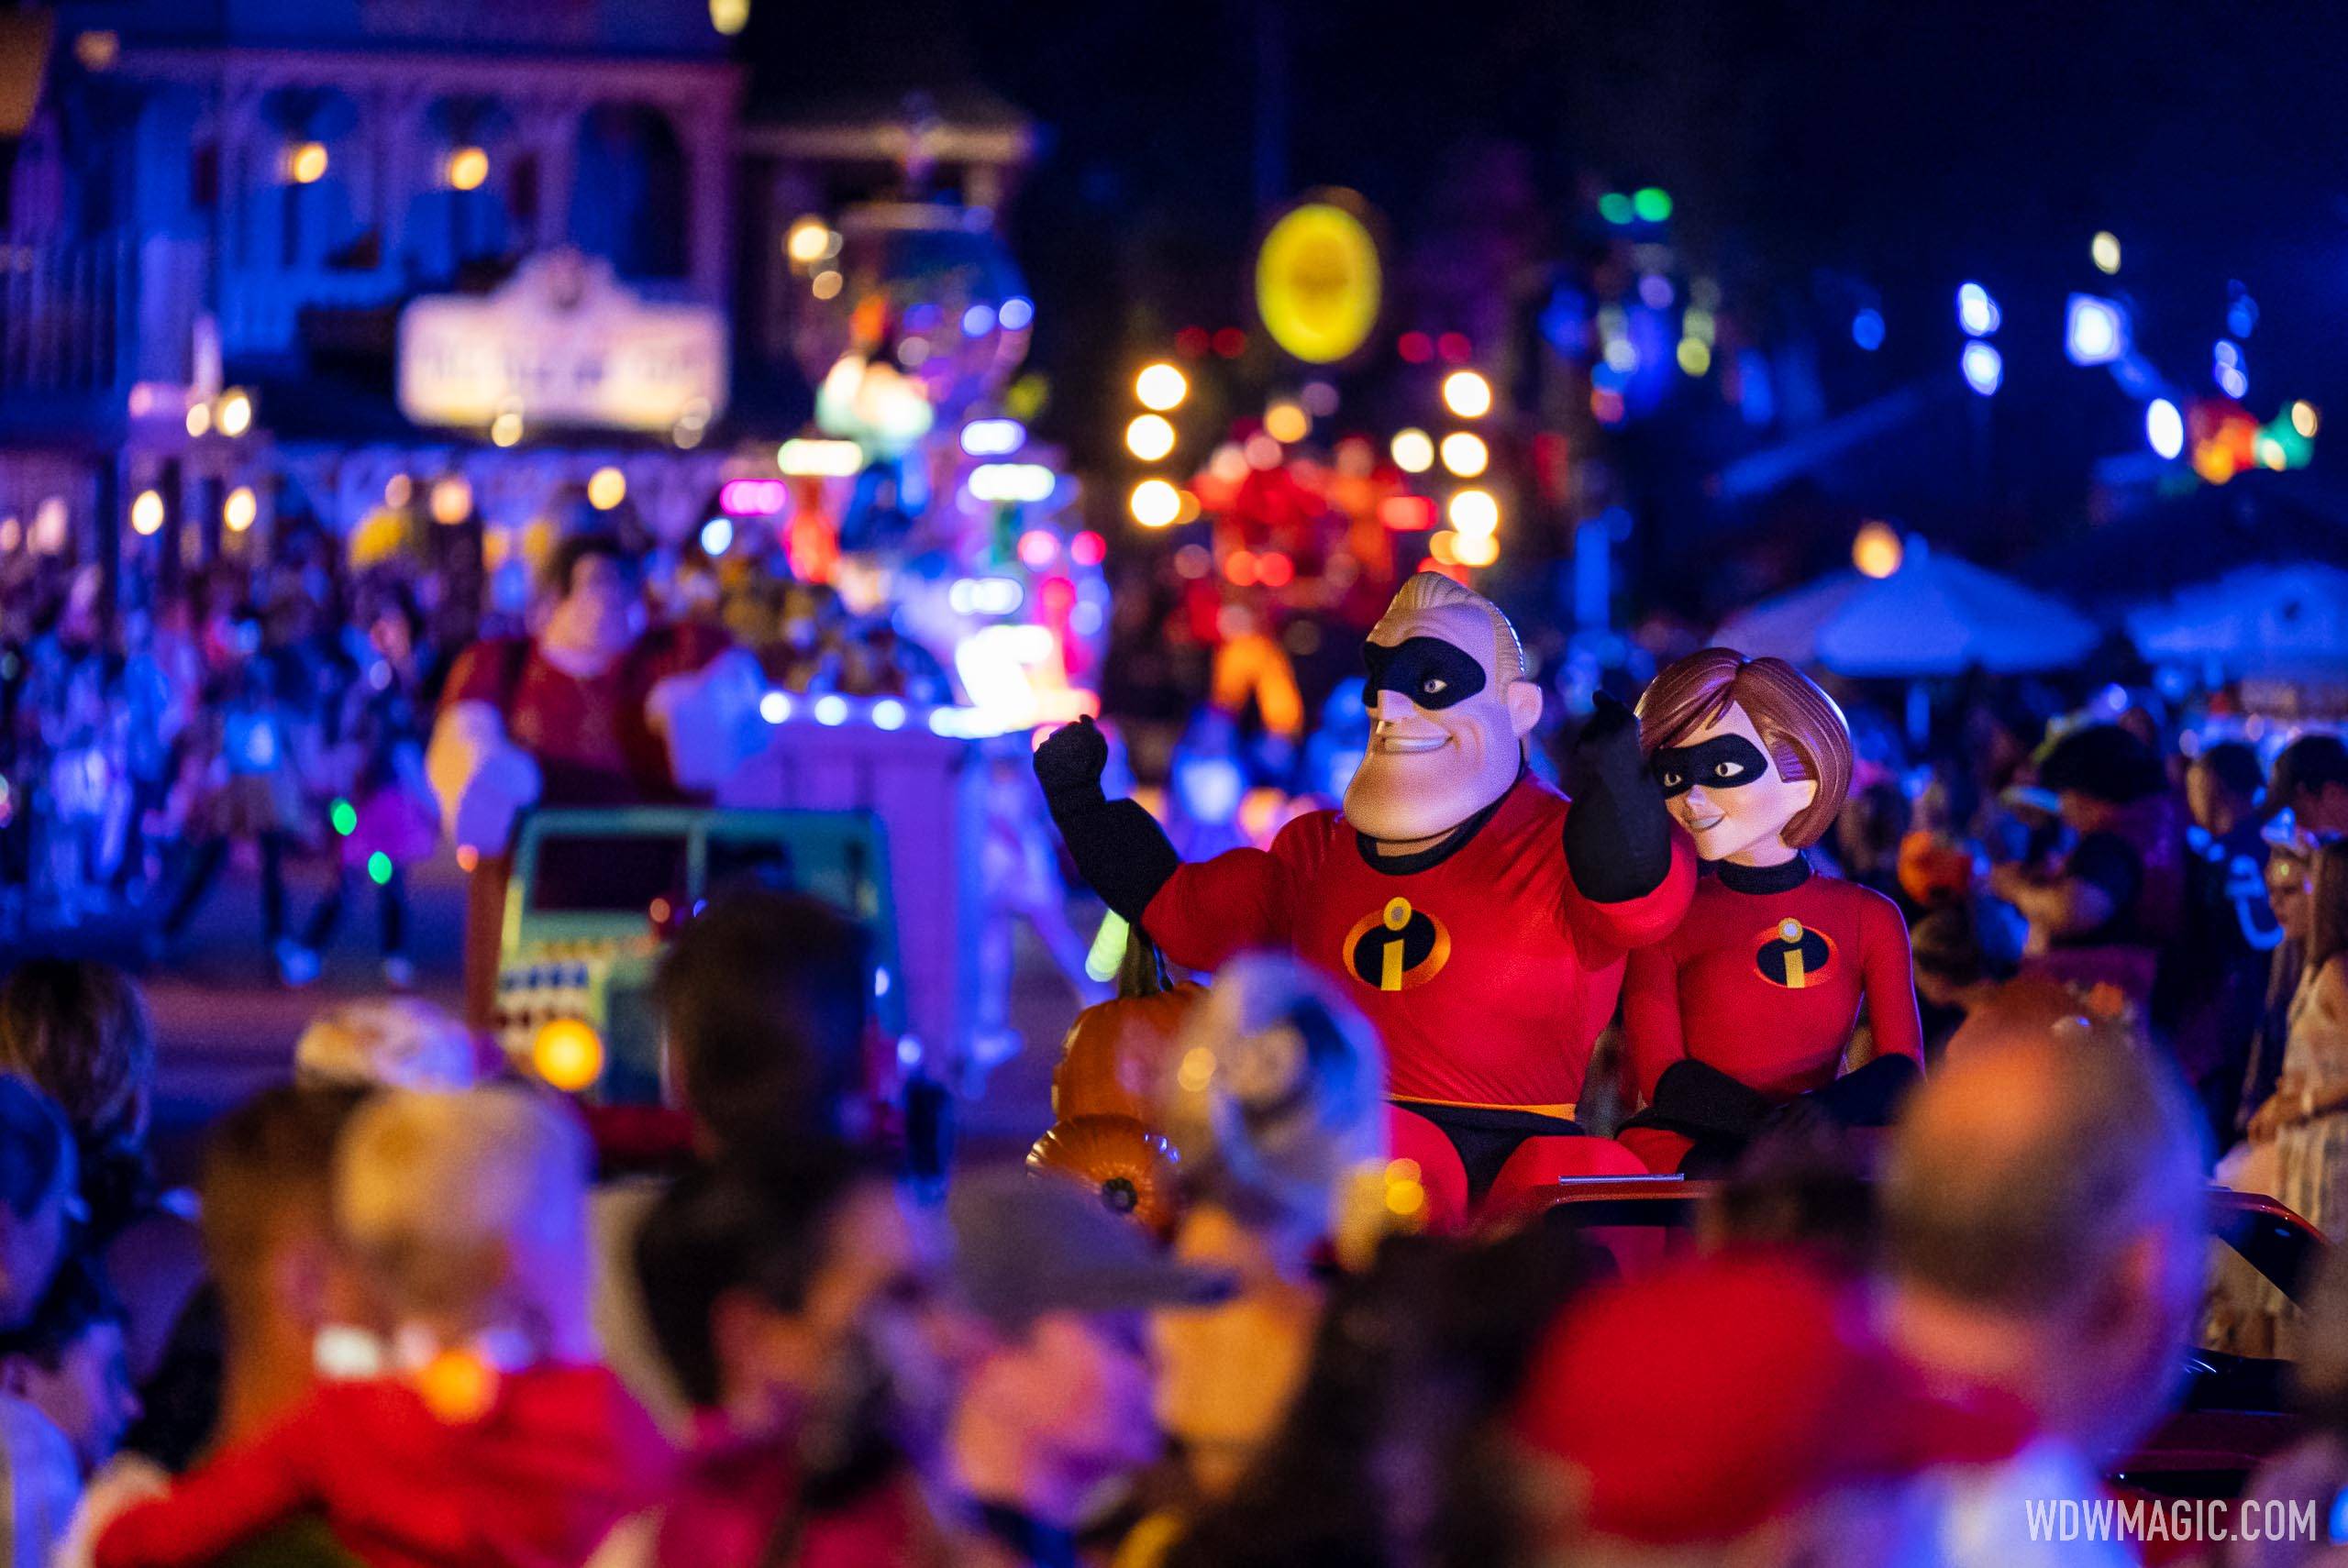 Mickey’s Boo-to-You Halloween Parade